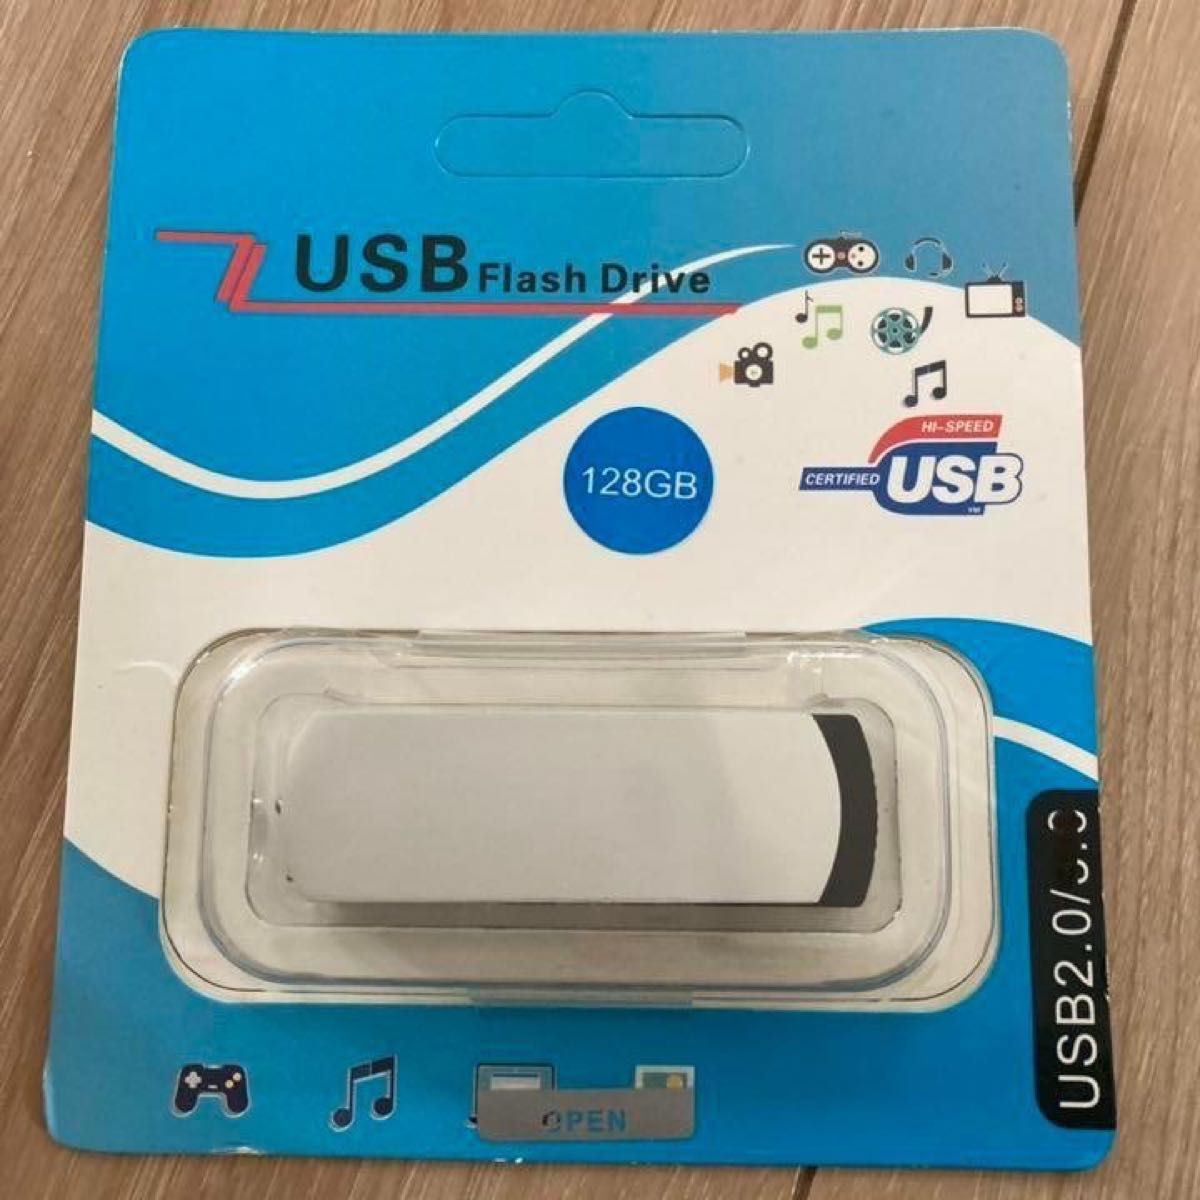 USBメモリ 128GB USB 2.0対応 高速データ転送 メーカー正規品認証